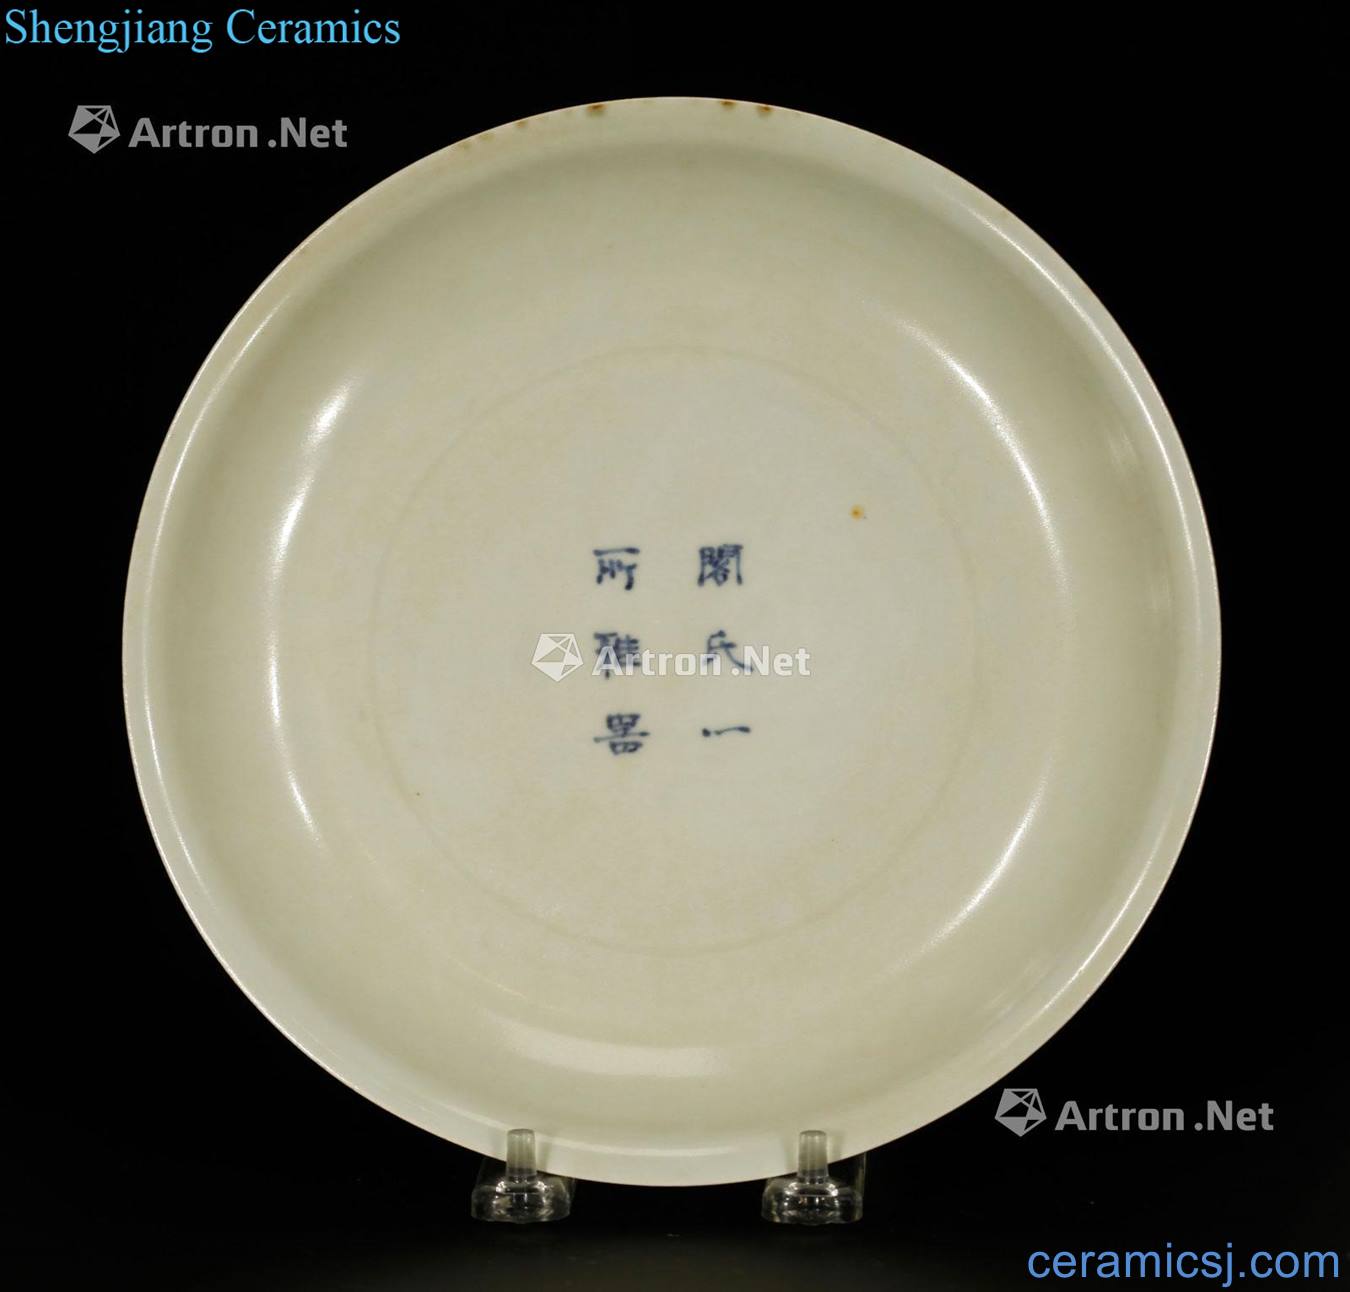 Ming Dynasty Chinese Celadon Glaze Porcelain Plate